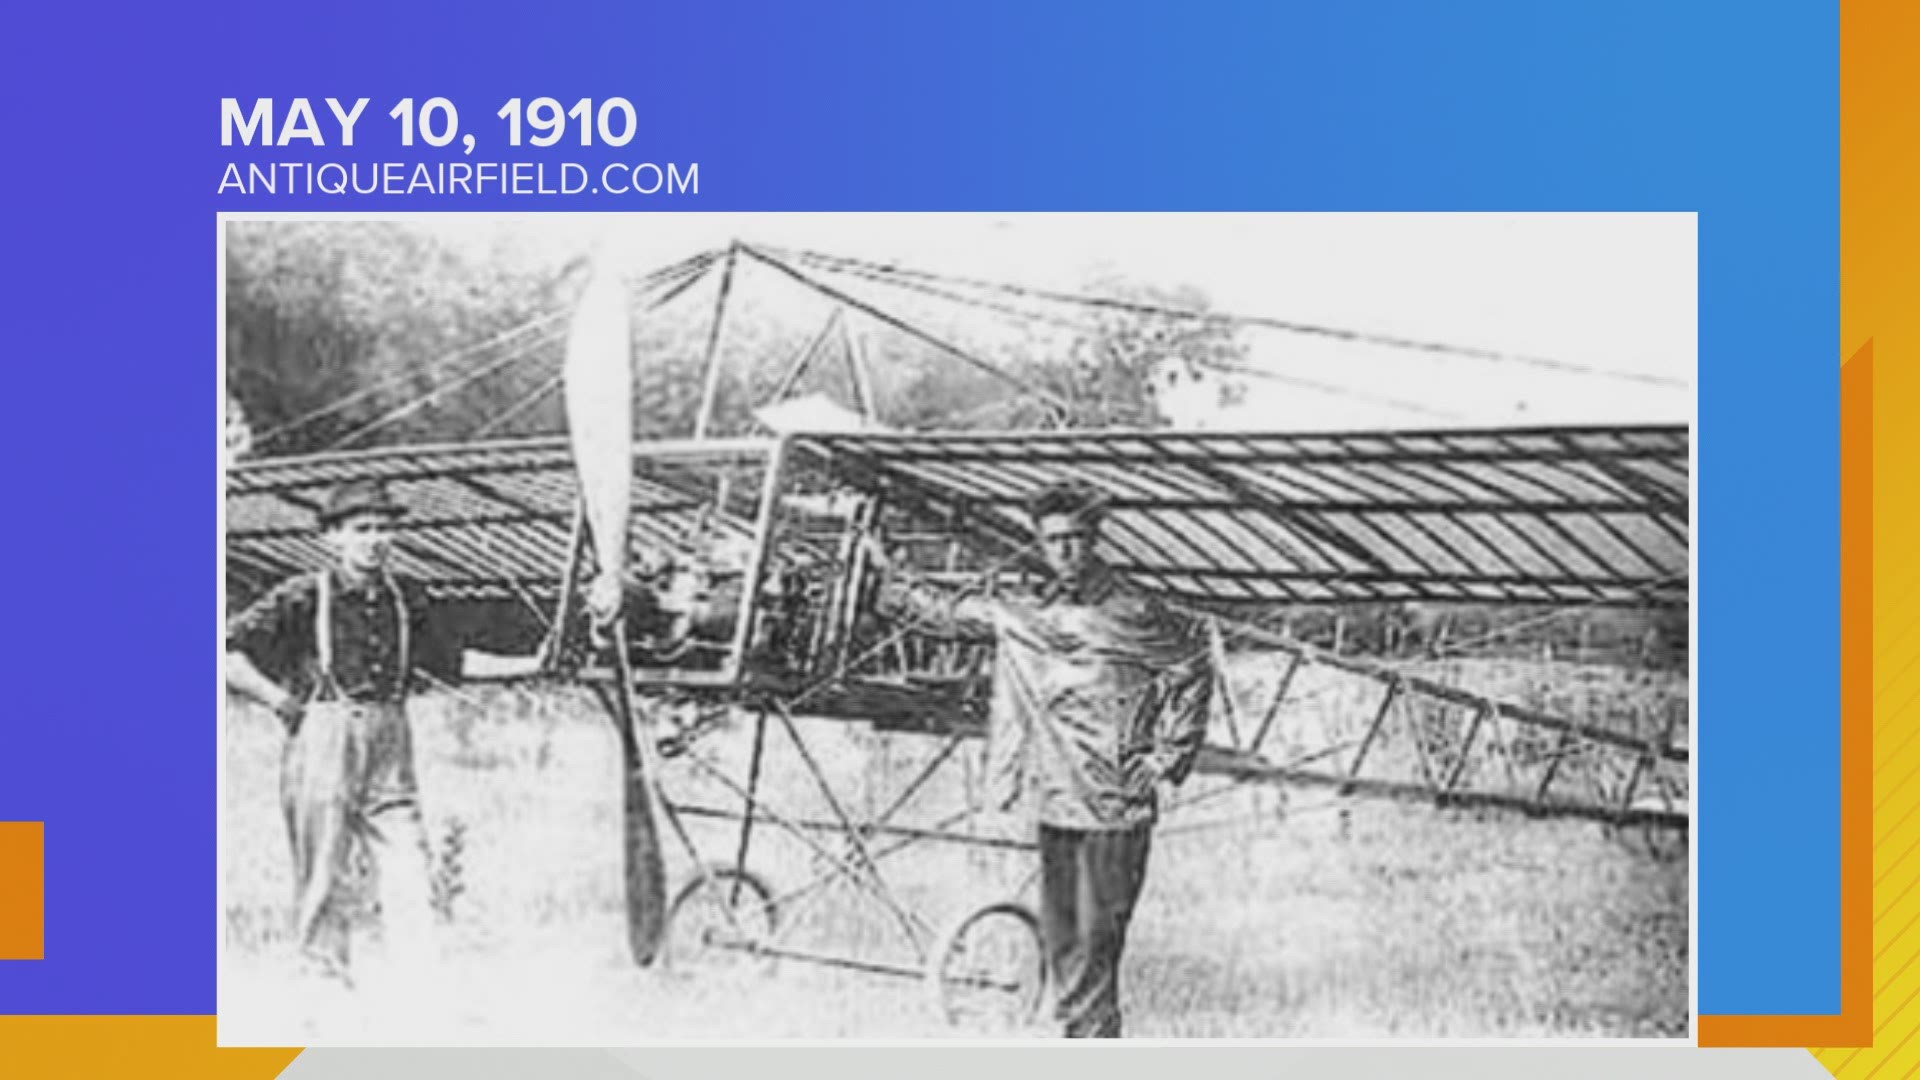 Iowa Almanac: Arthur J. Hartman of Burlington made the first flight of heavier-than-air craft in Iowa! Professor Jeff Stein has the story.